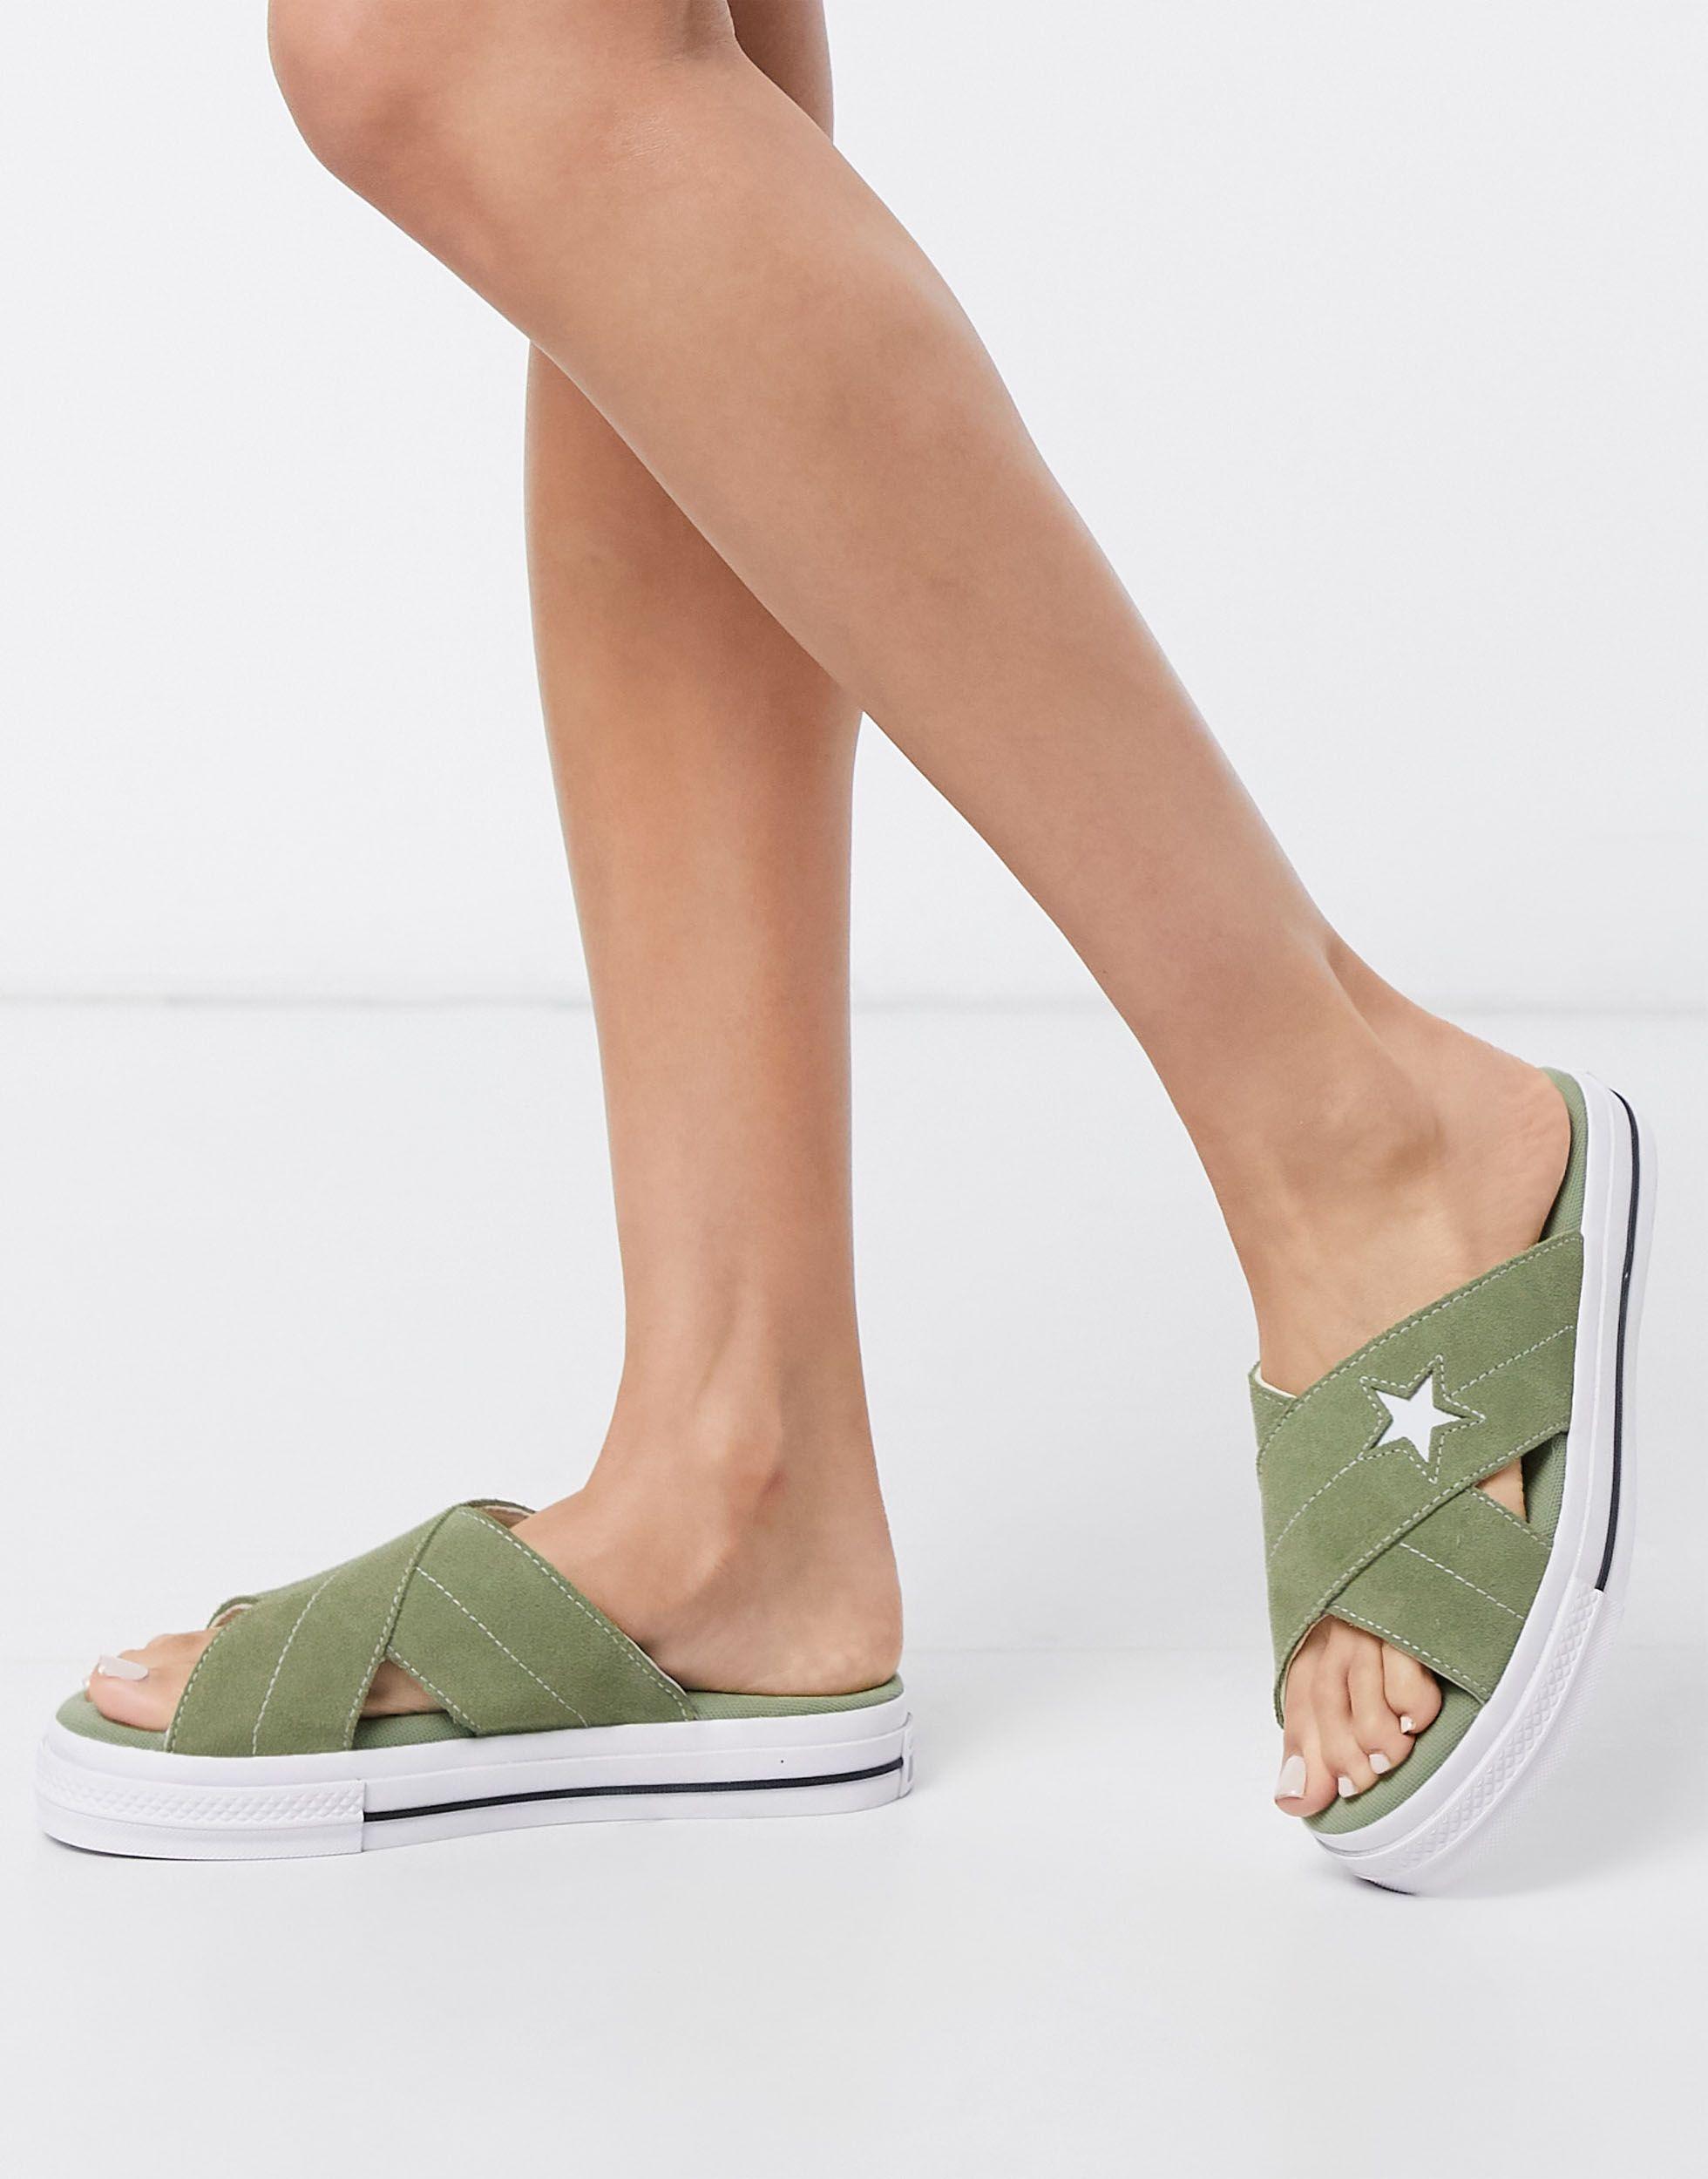 Leaflet Endure Shed Converse One Star Khaki Green Sandals | Lyst